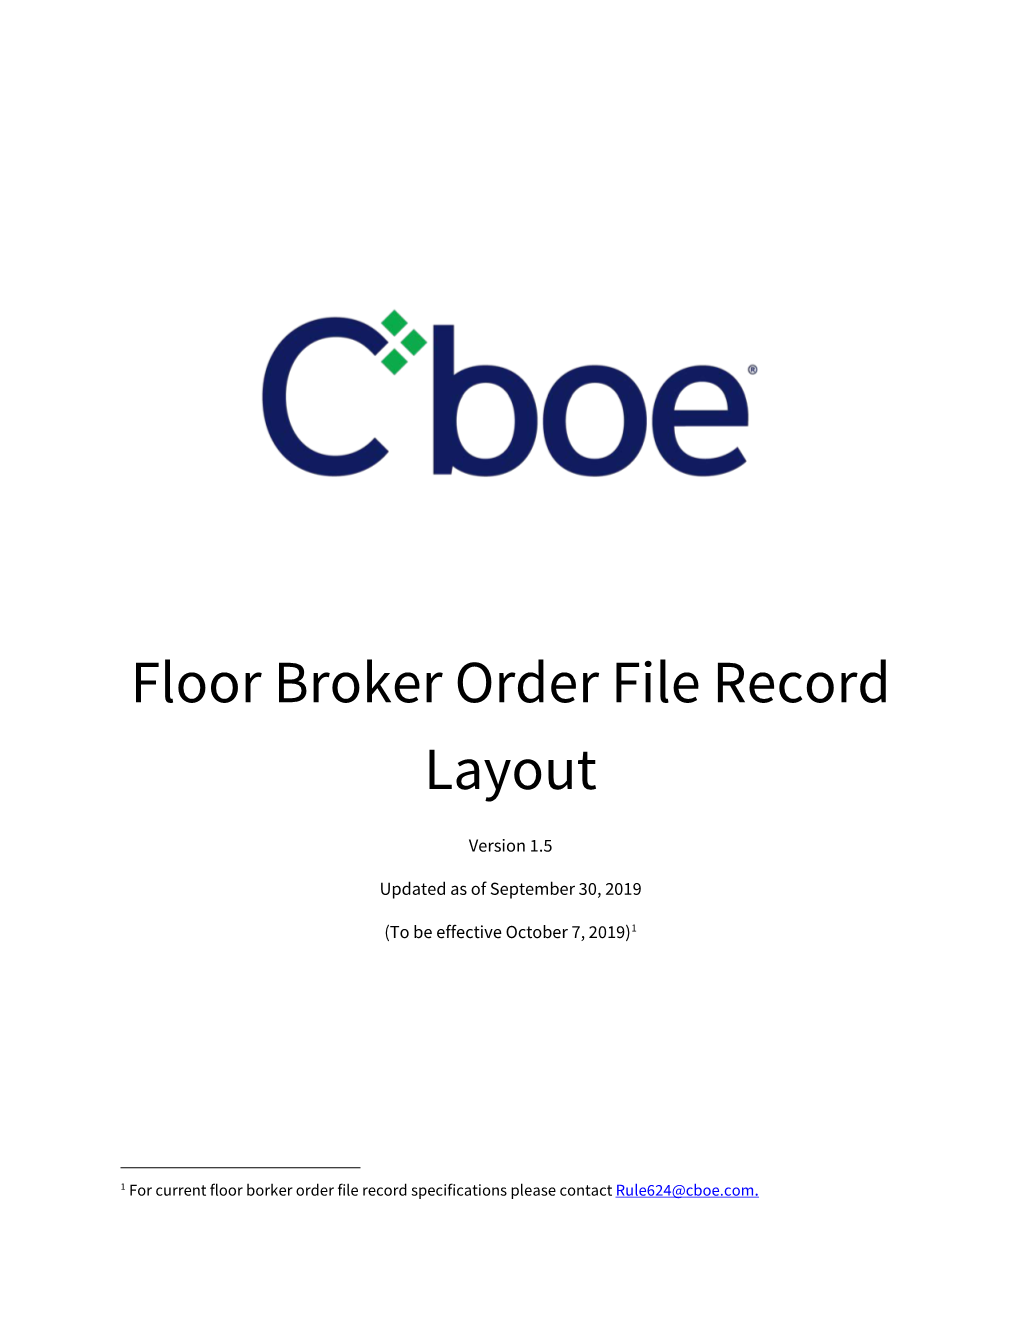 Floor Broker Order File Record Layout